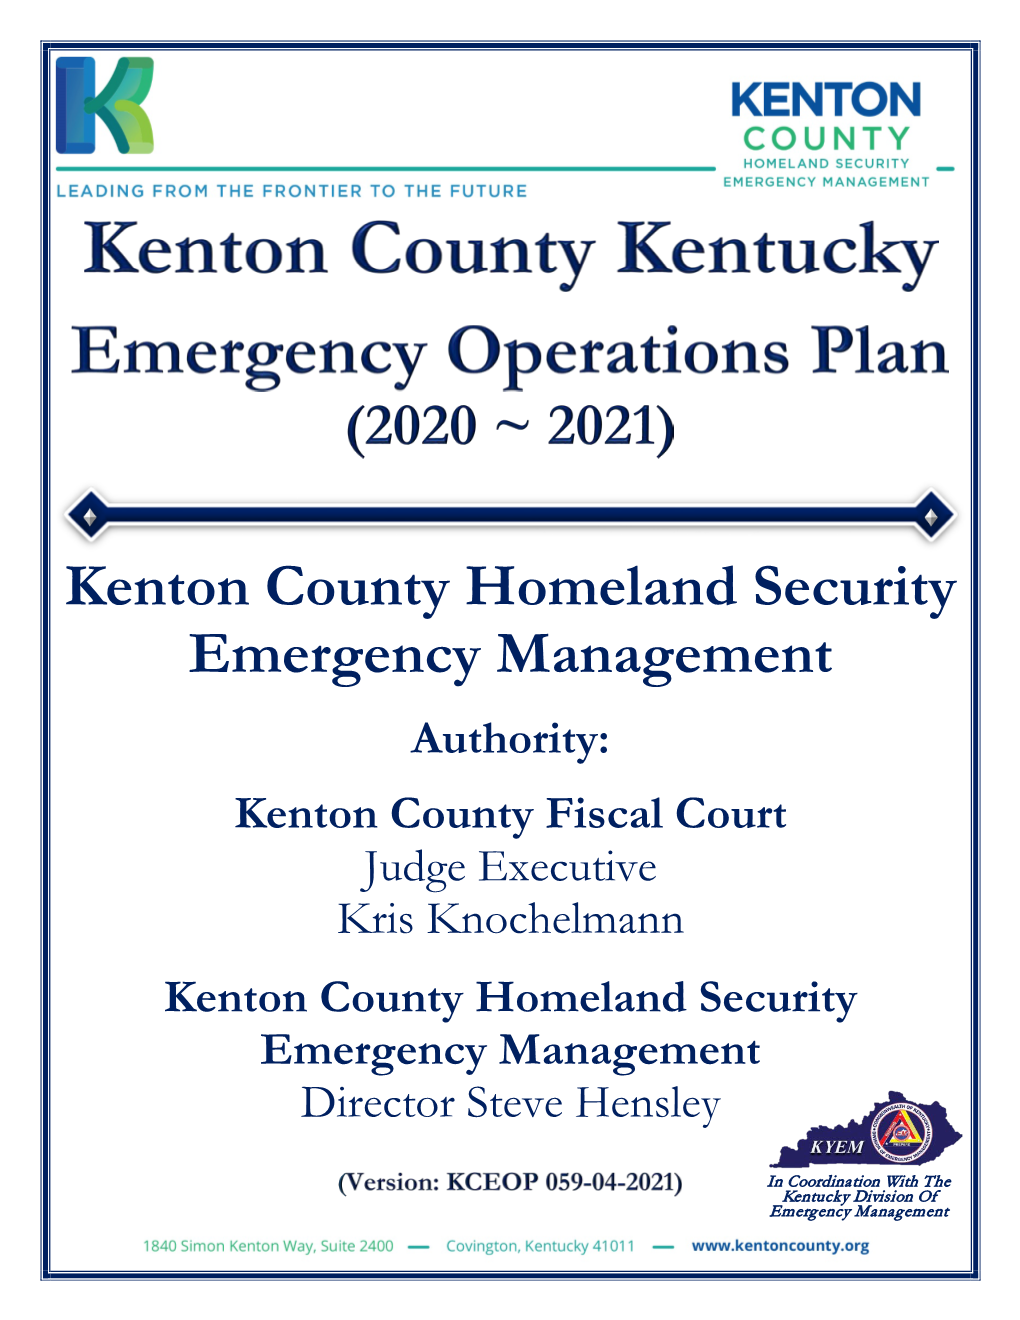 Kenton County Homeland Security Emergency Management